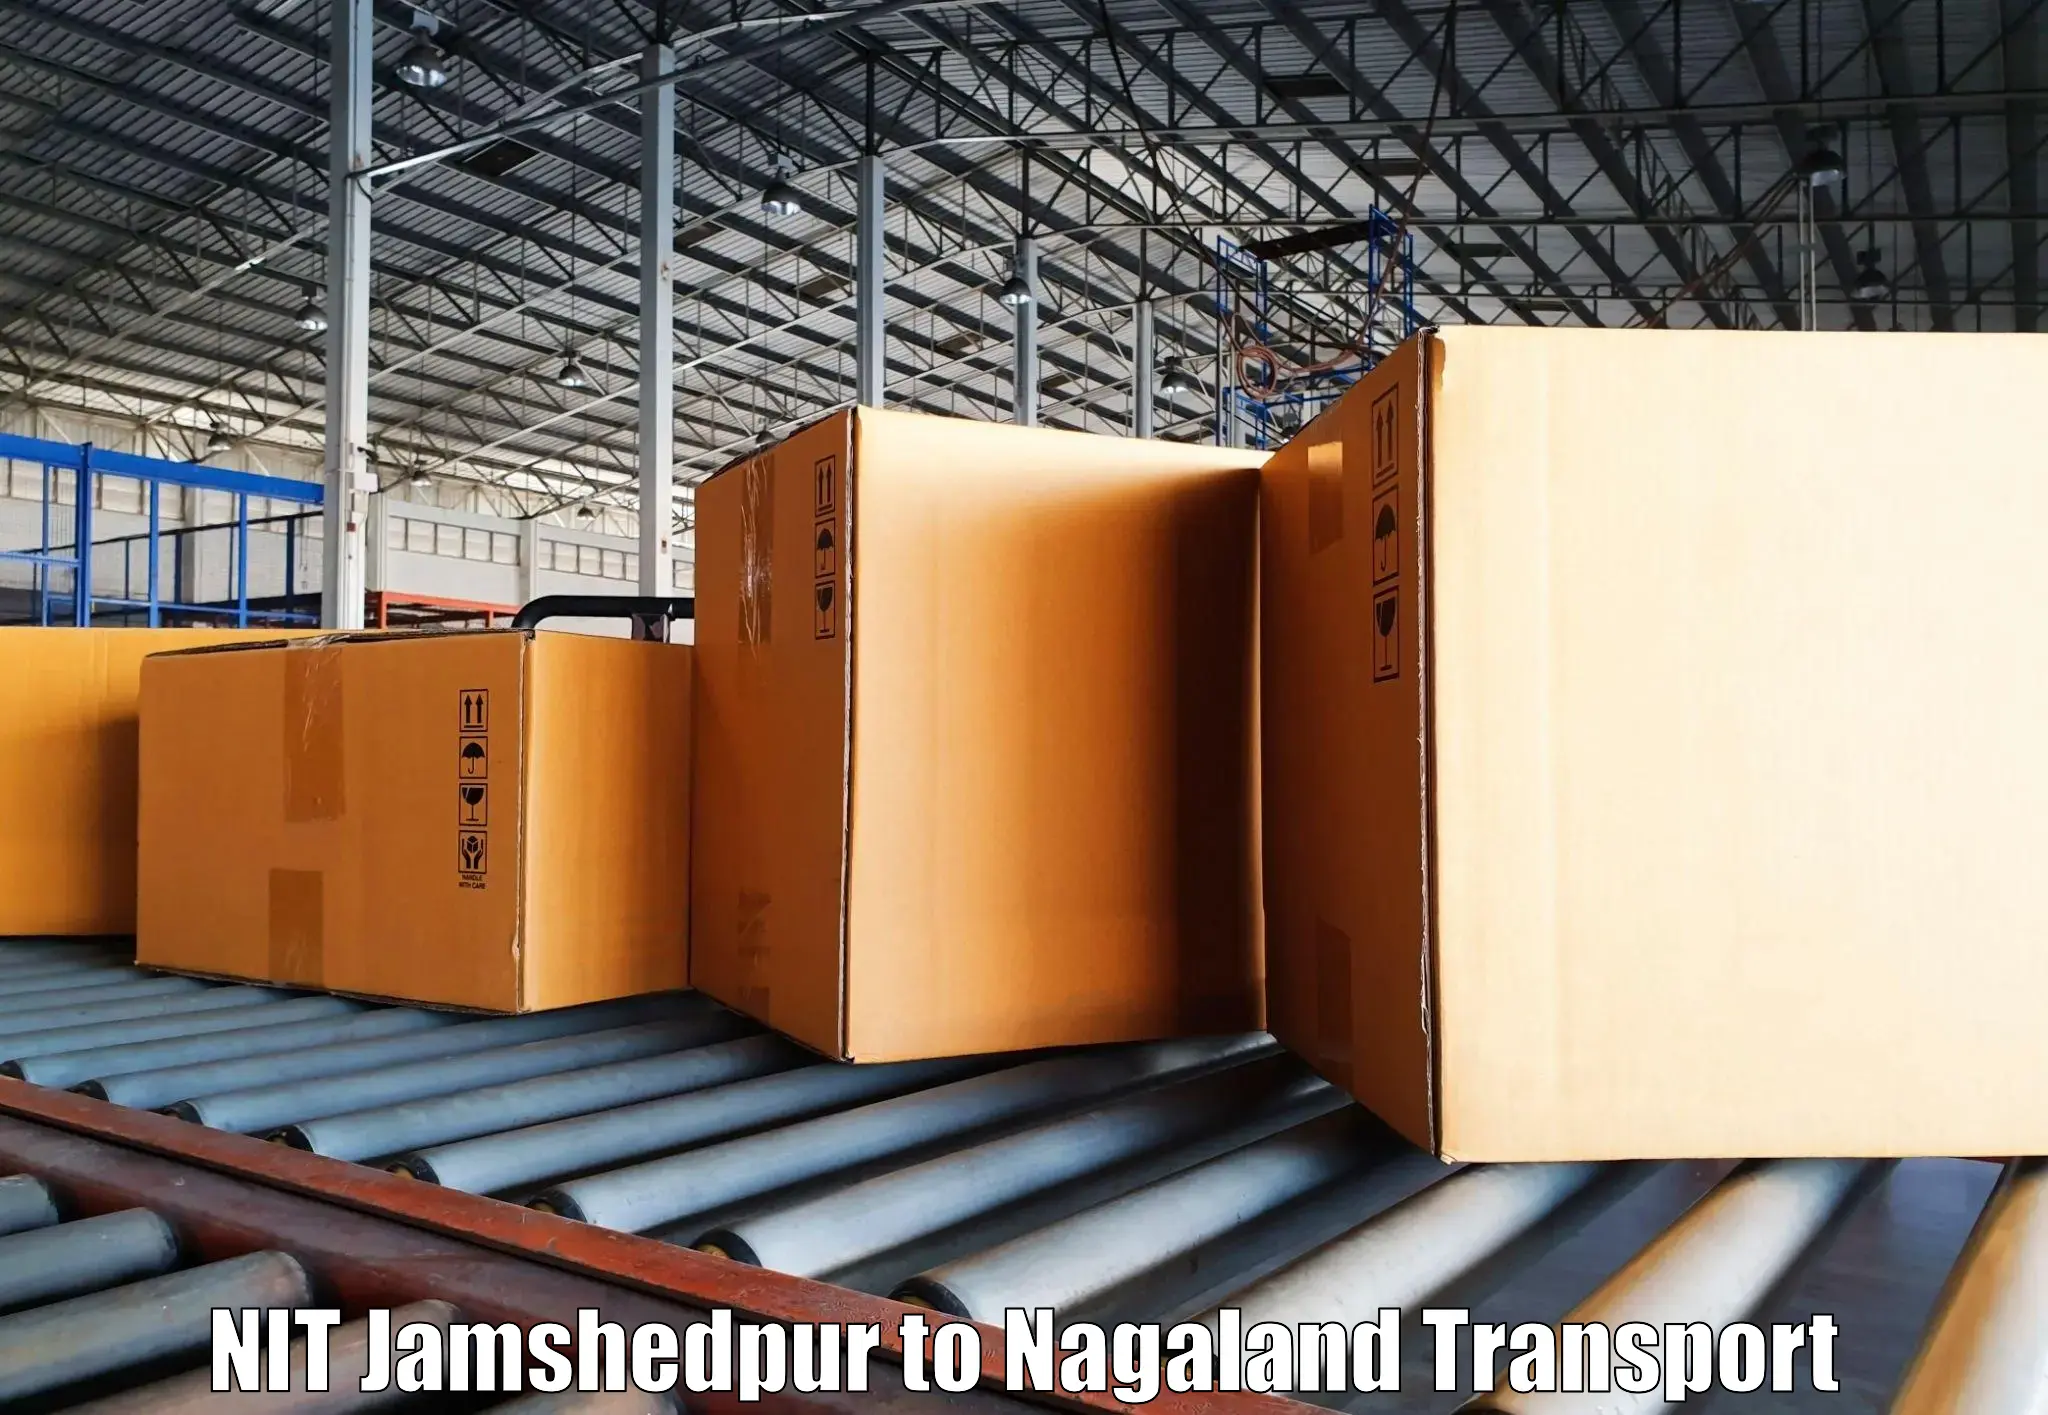 Delivery service NIT Jamshedpur to Dimapur